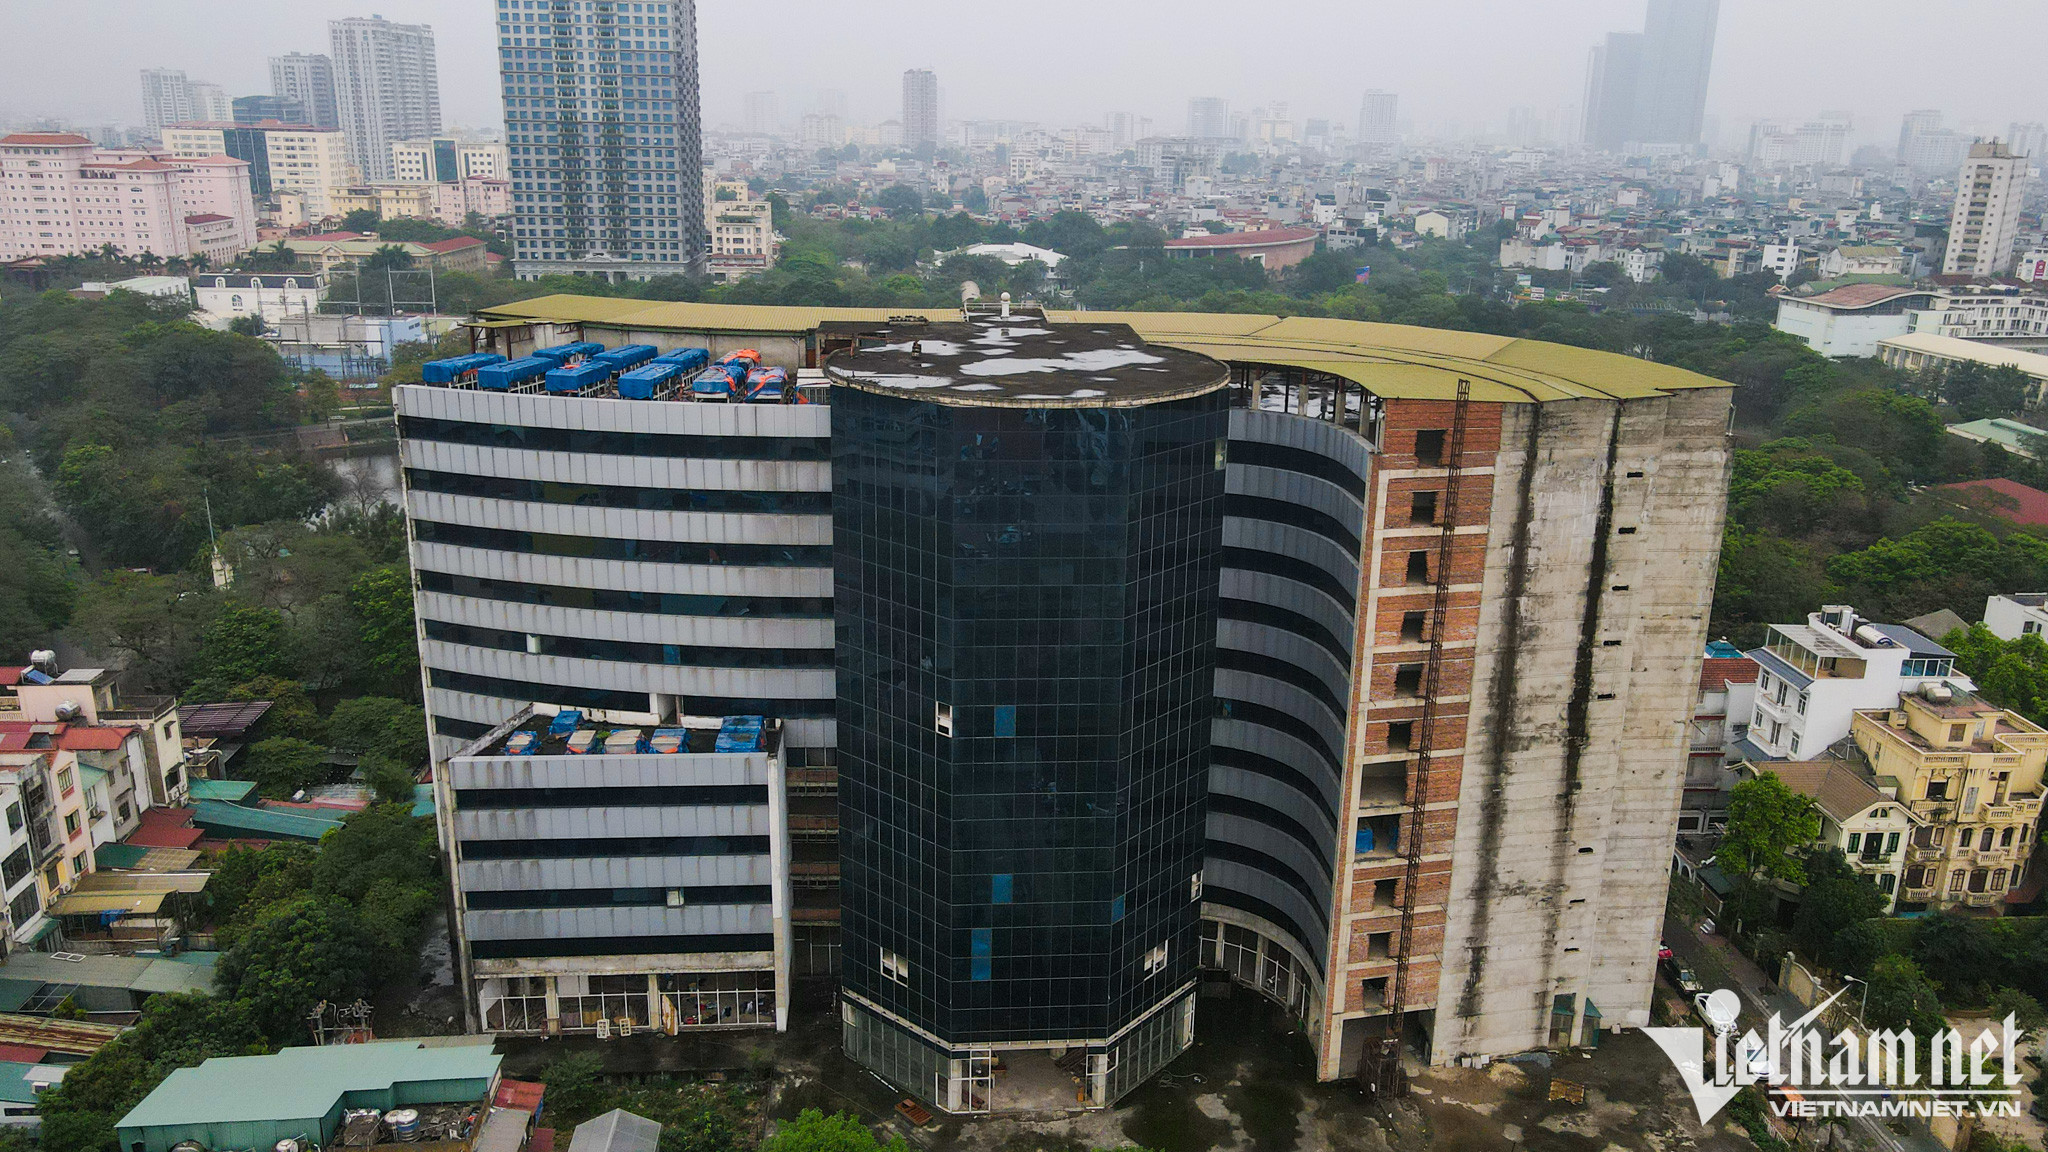 Million USD hospital project abandoned in Hanoi